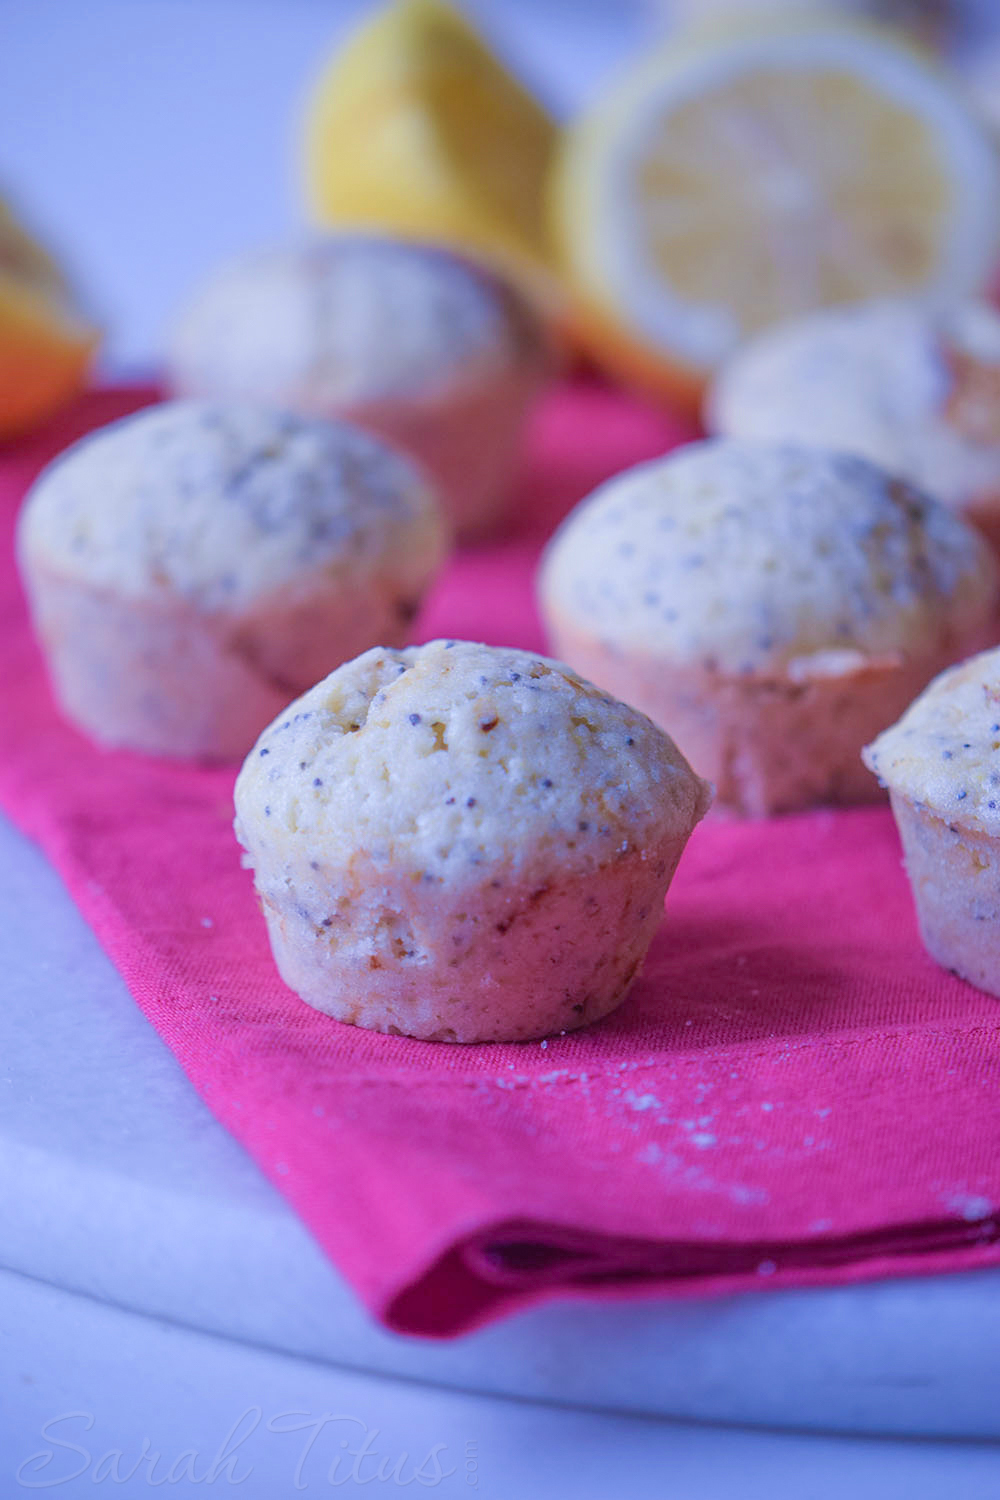 Freshly baked lemon poppy muffins on a pink cloth napkin